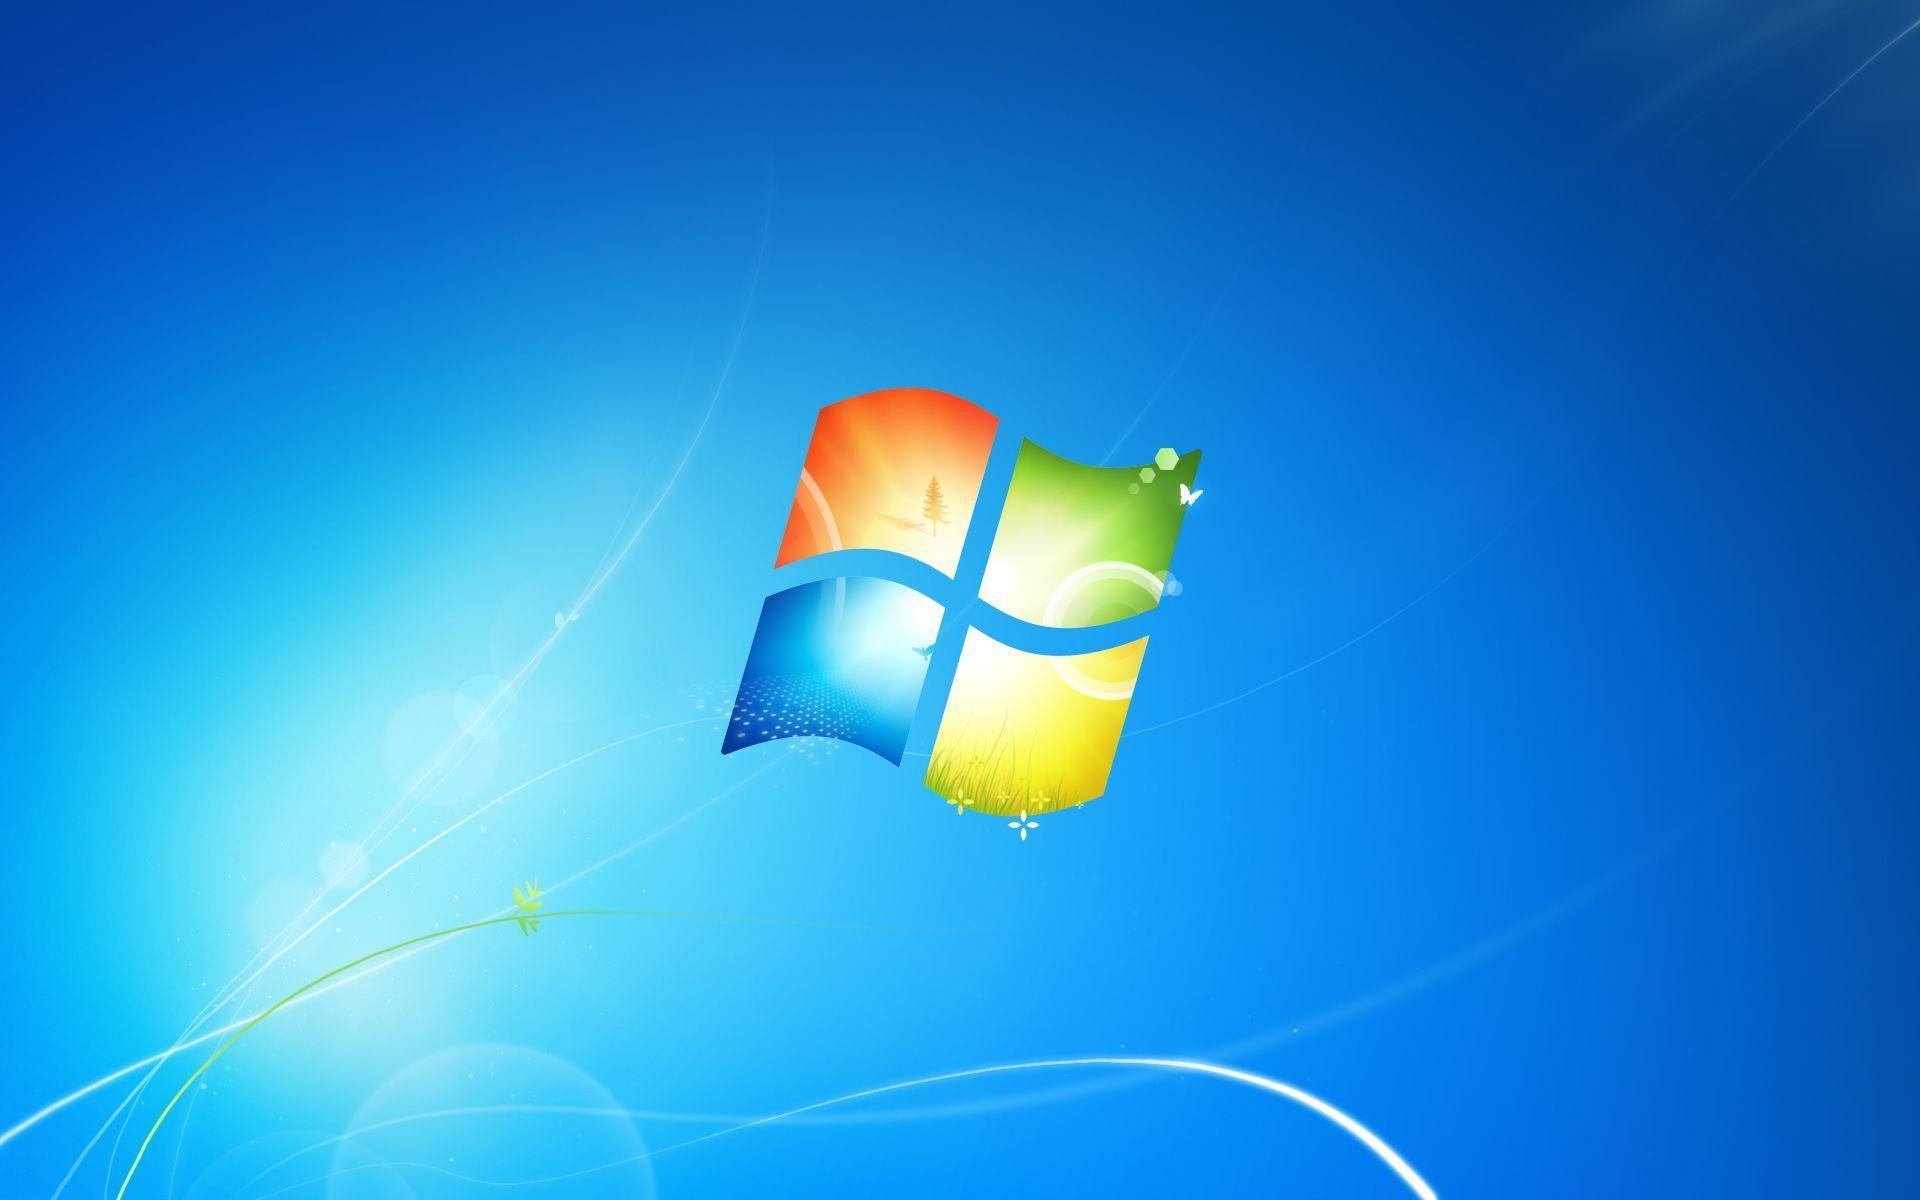  Sexy New Wallpapers   Windows XP Themes Windows Vista Themes Windows